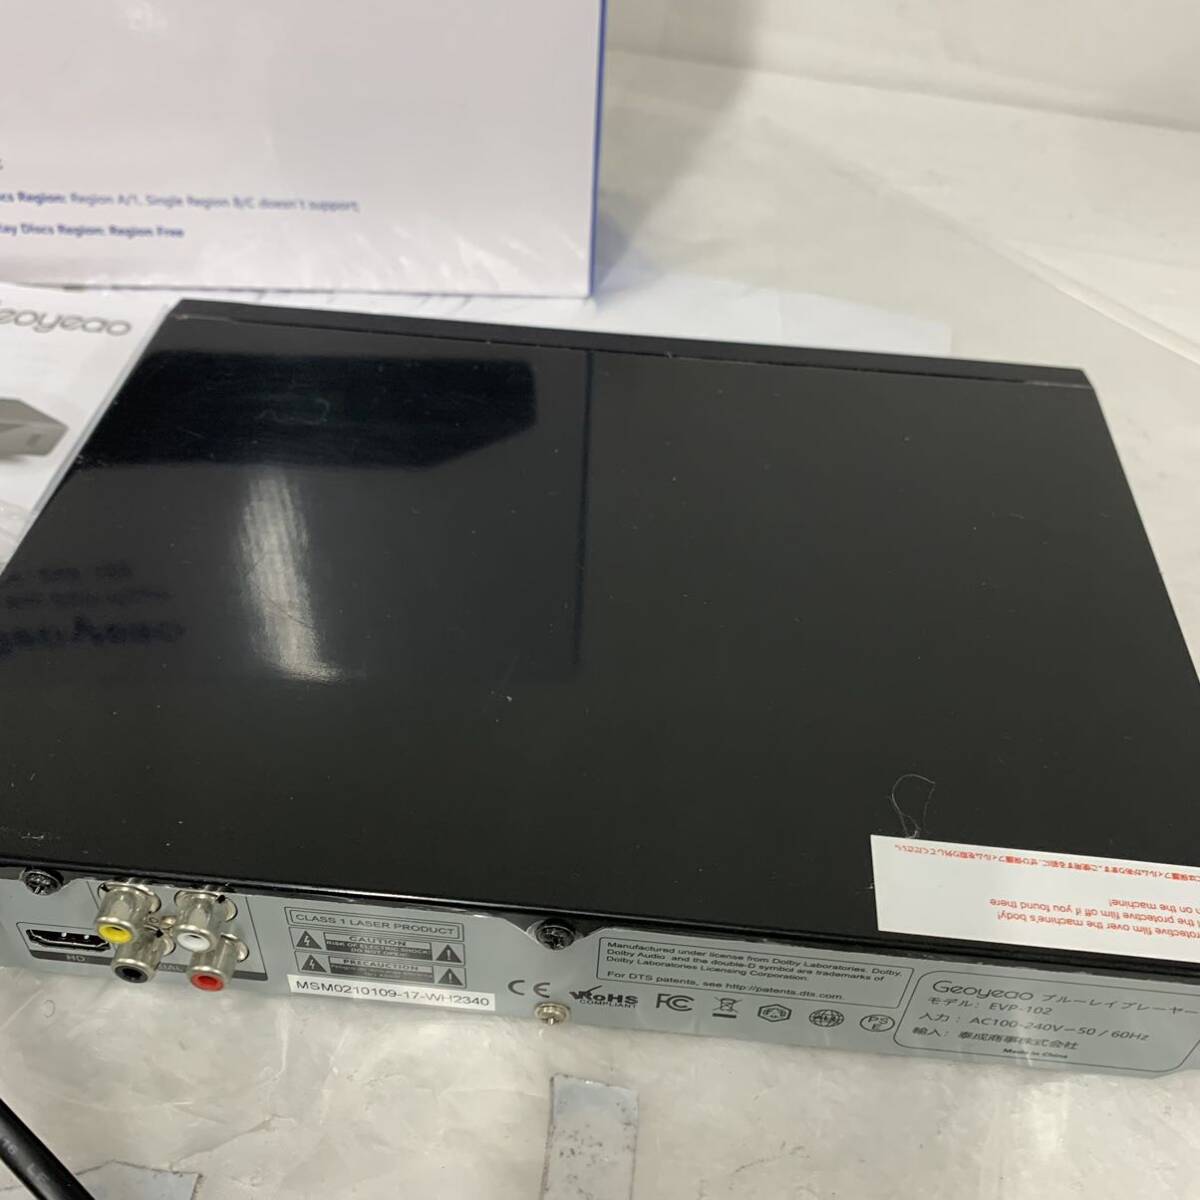 1 иен лот электризация ok Geoyeao Blue-ray DVD плеер EVP-102DVD плеер принадлежности коробка есть ka4